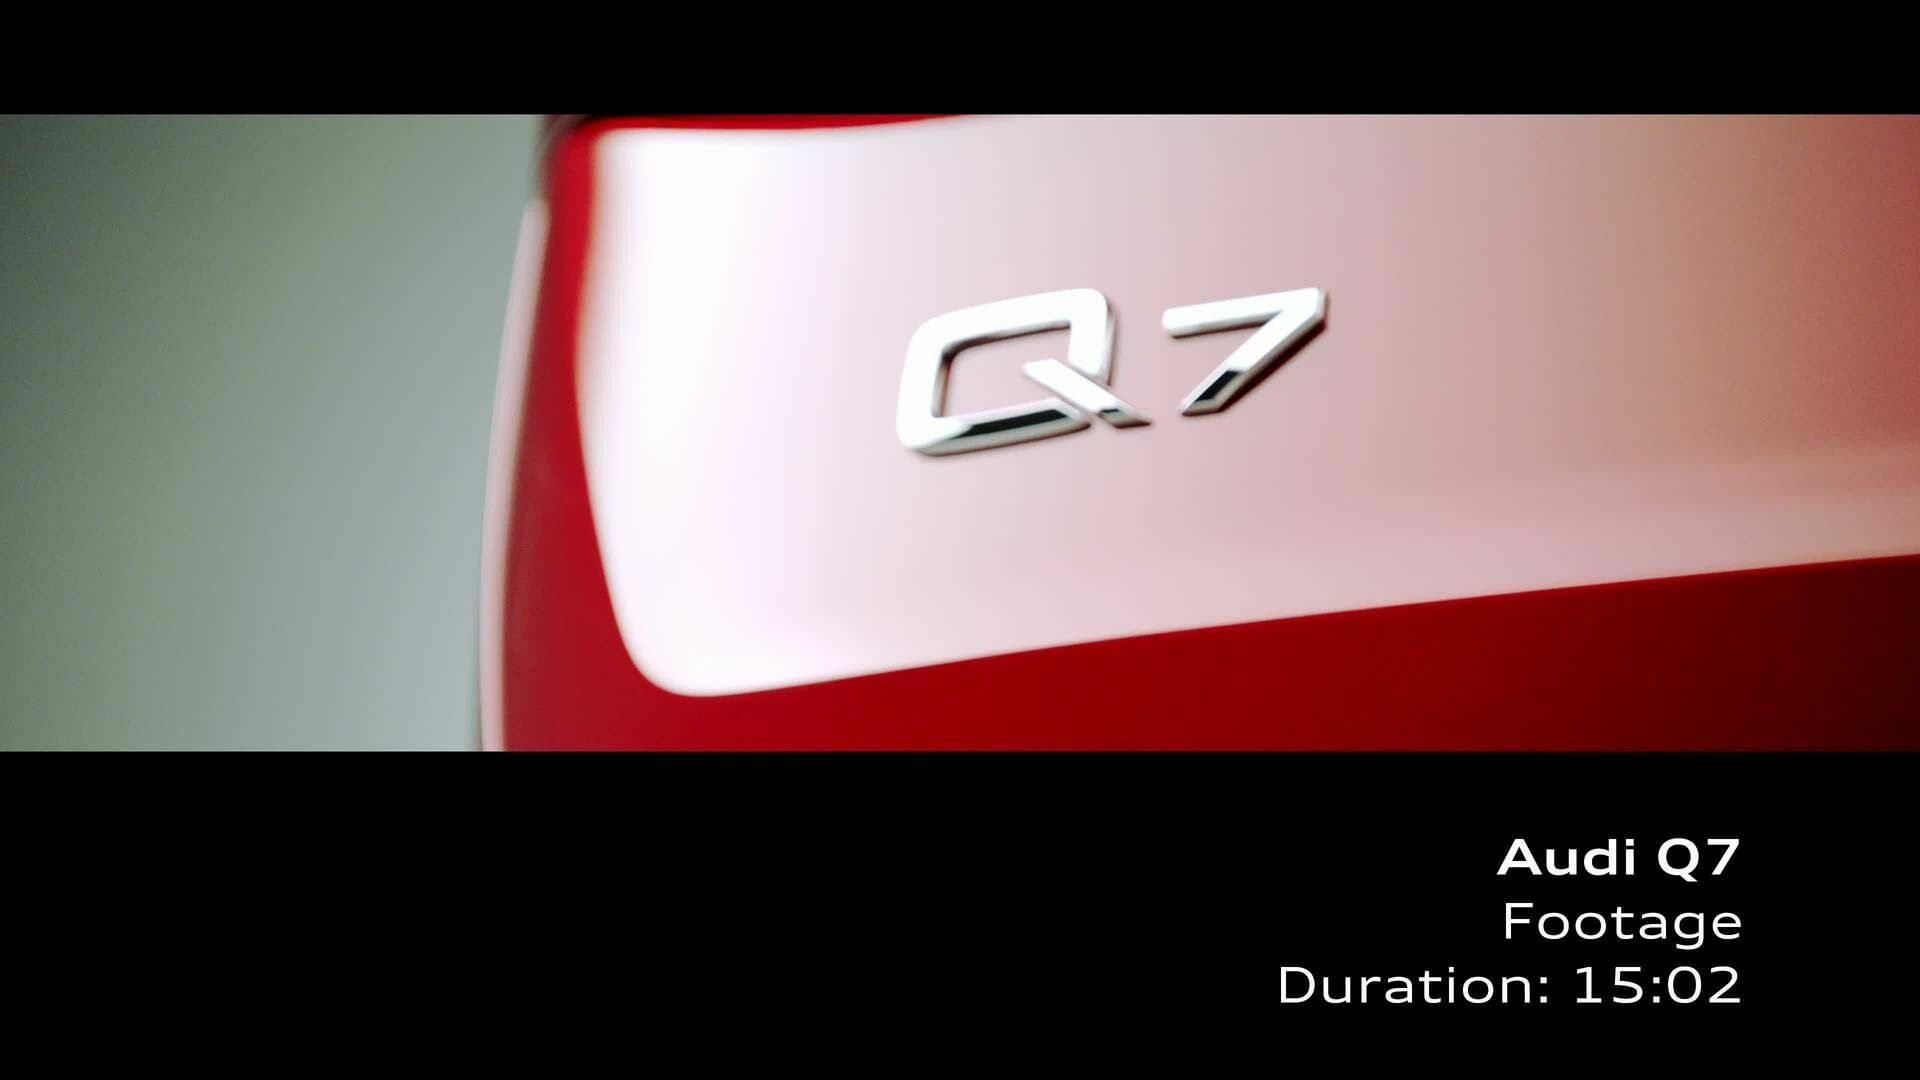 Audi Q7 (Studiofootage)